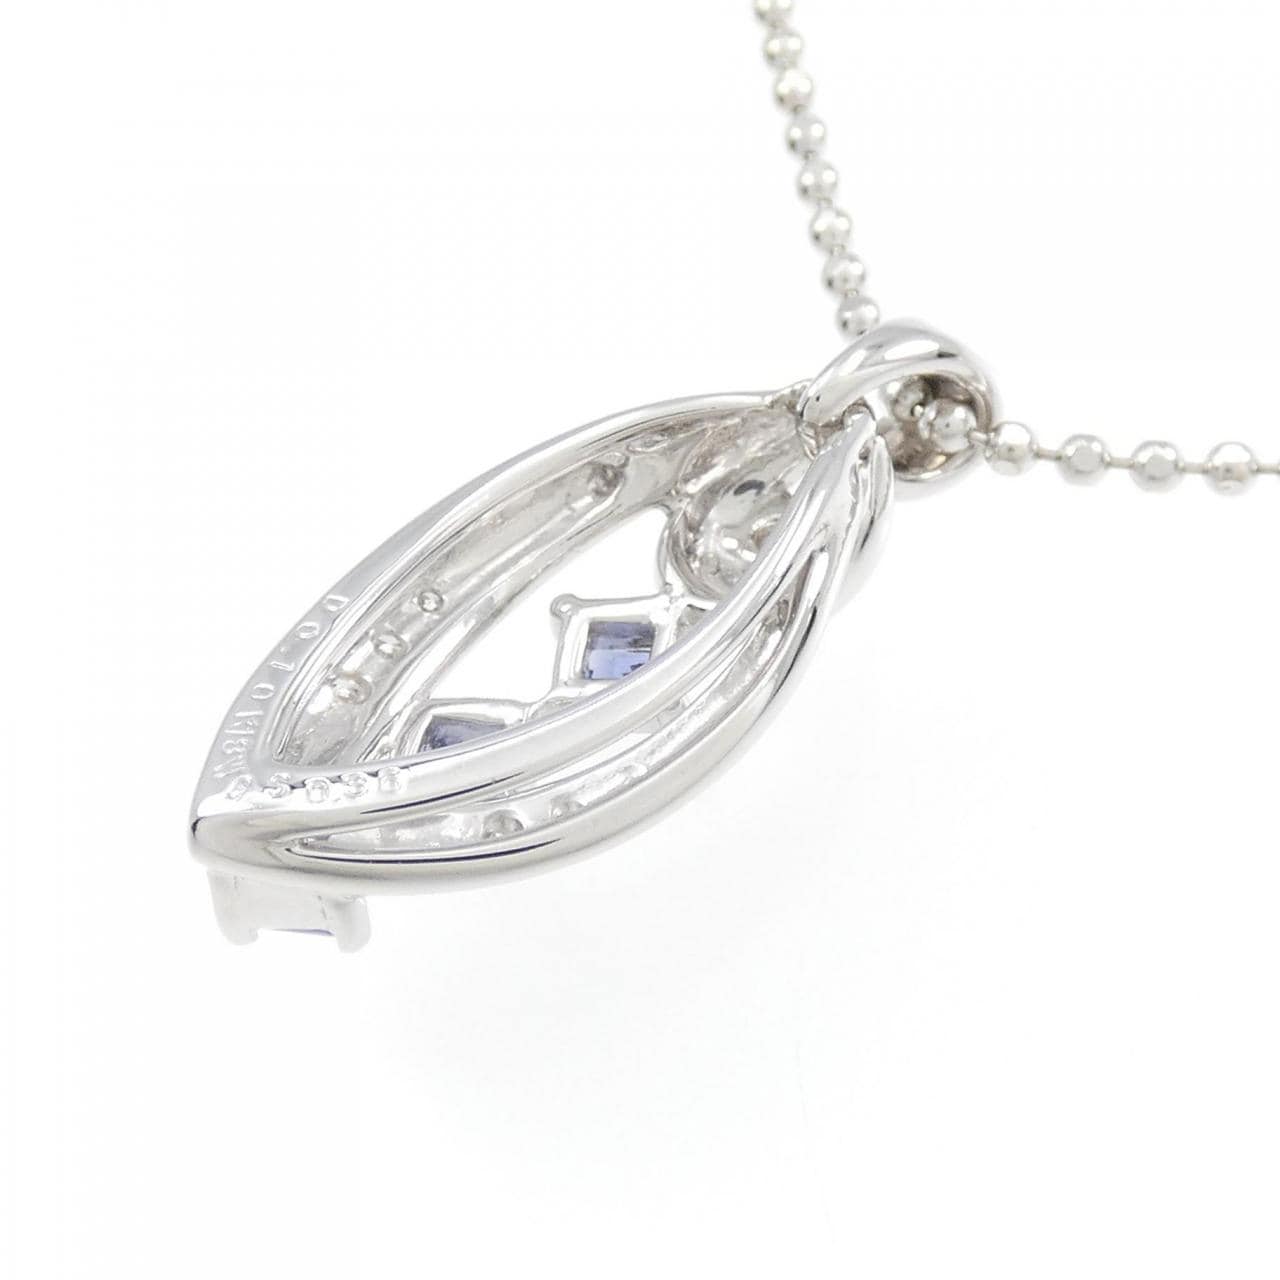 K18WG sapphire necklace 0.36CT